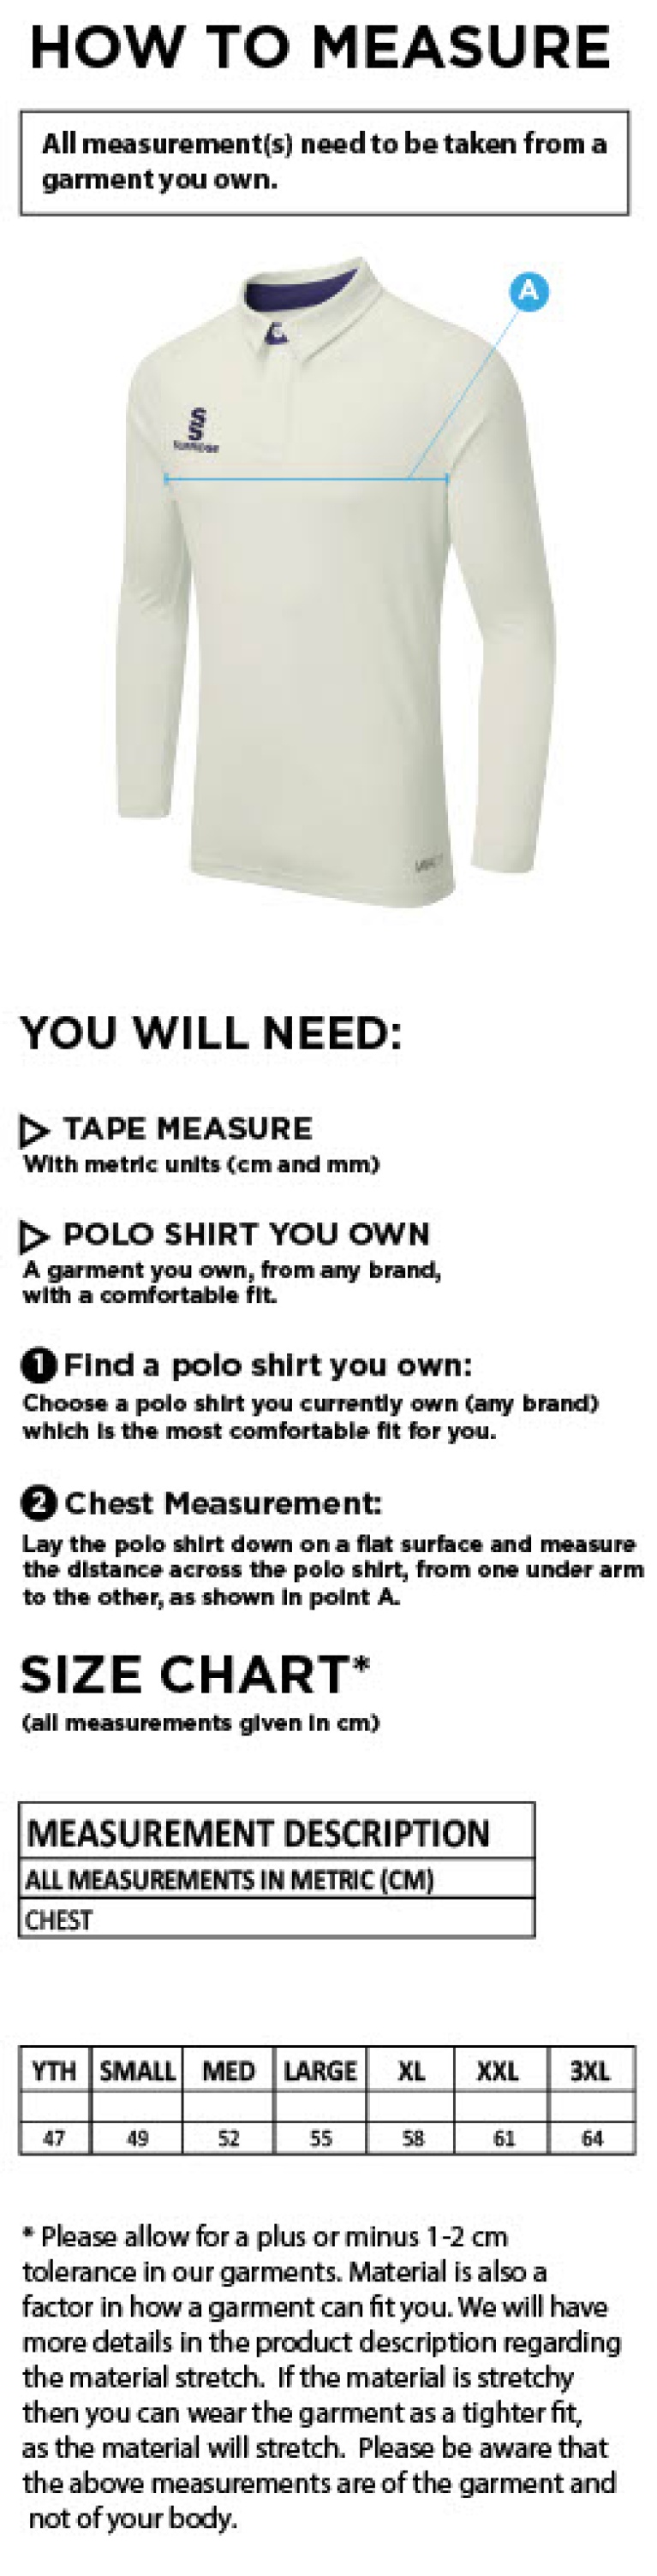 Sherwood CC - Ergo Long Sleeve Shirt - Size Guide